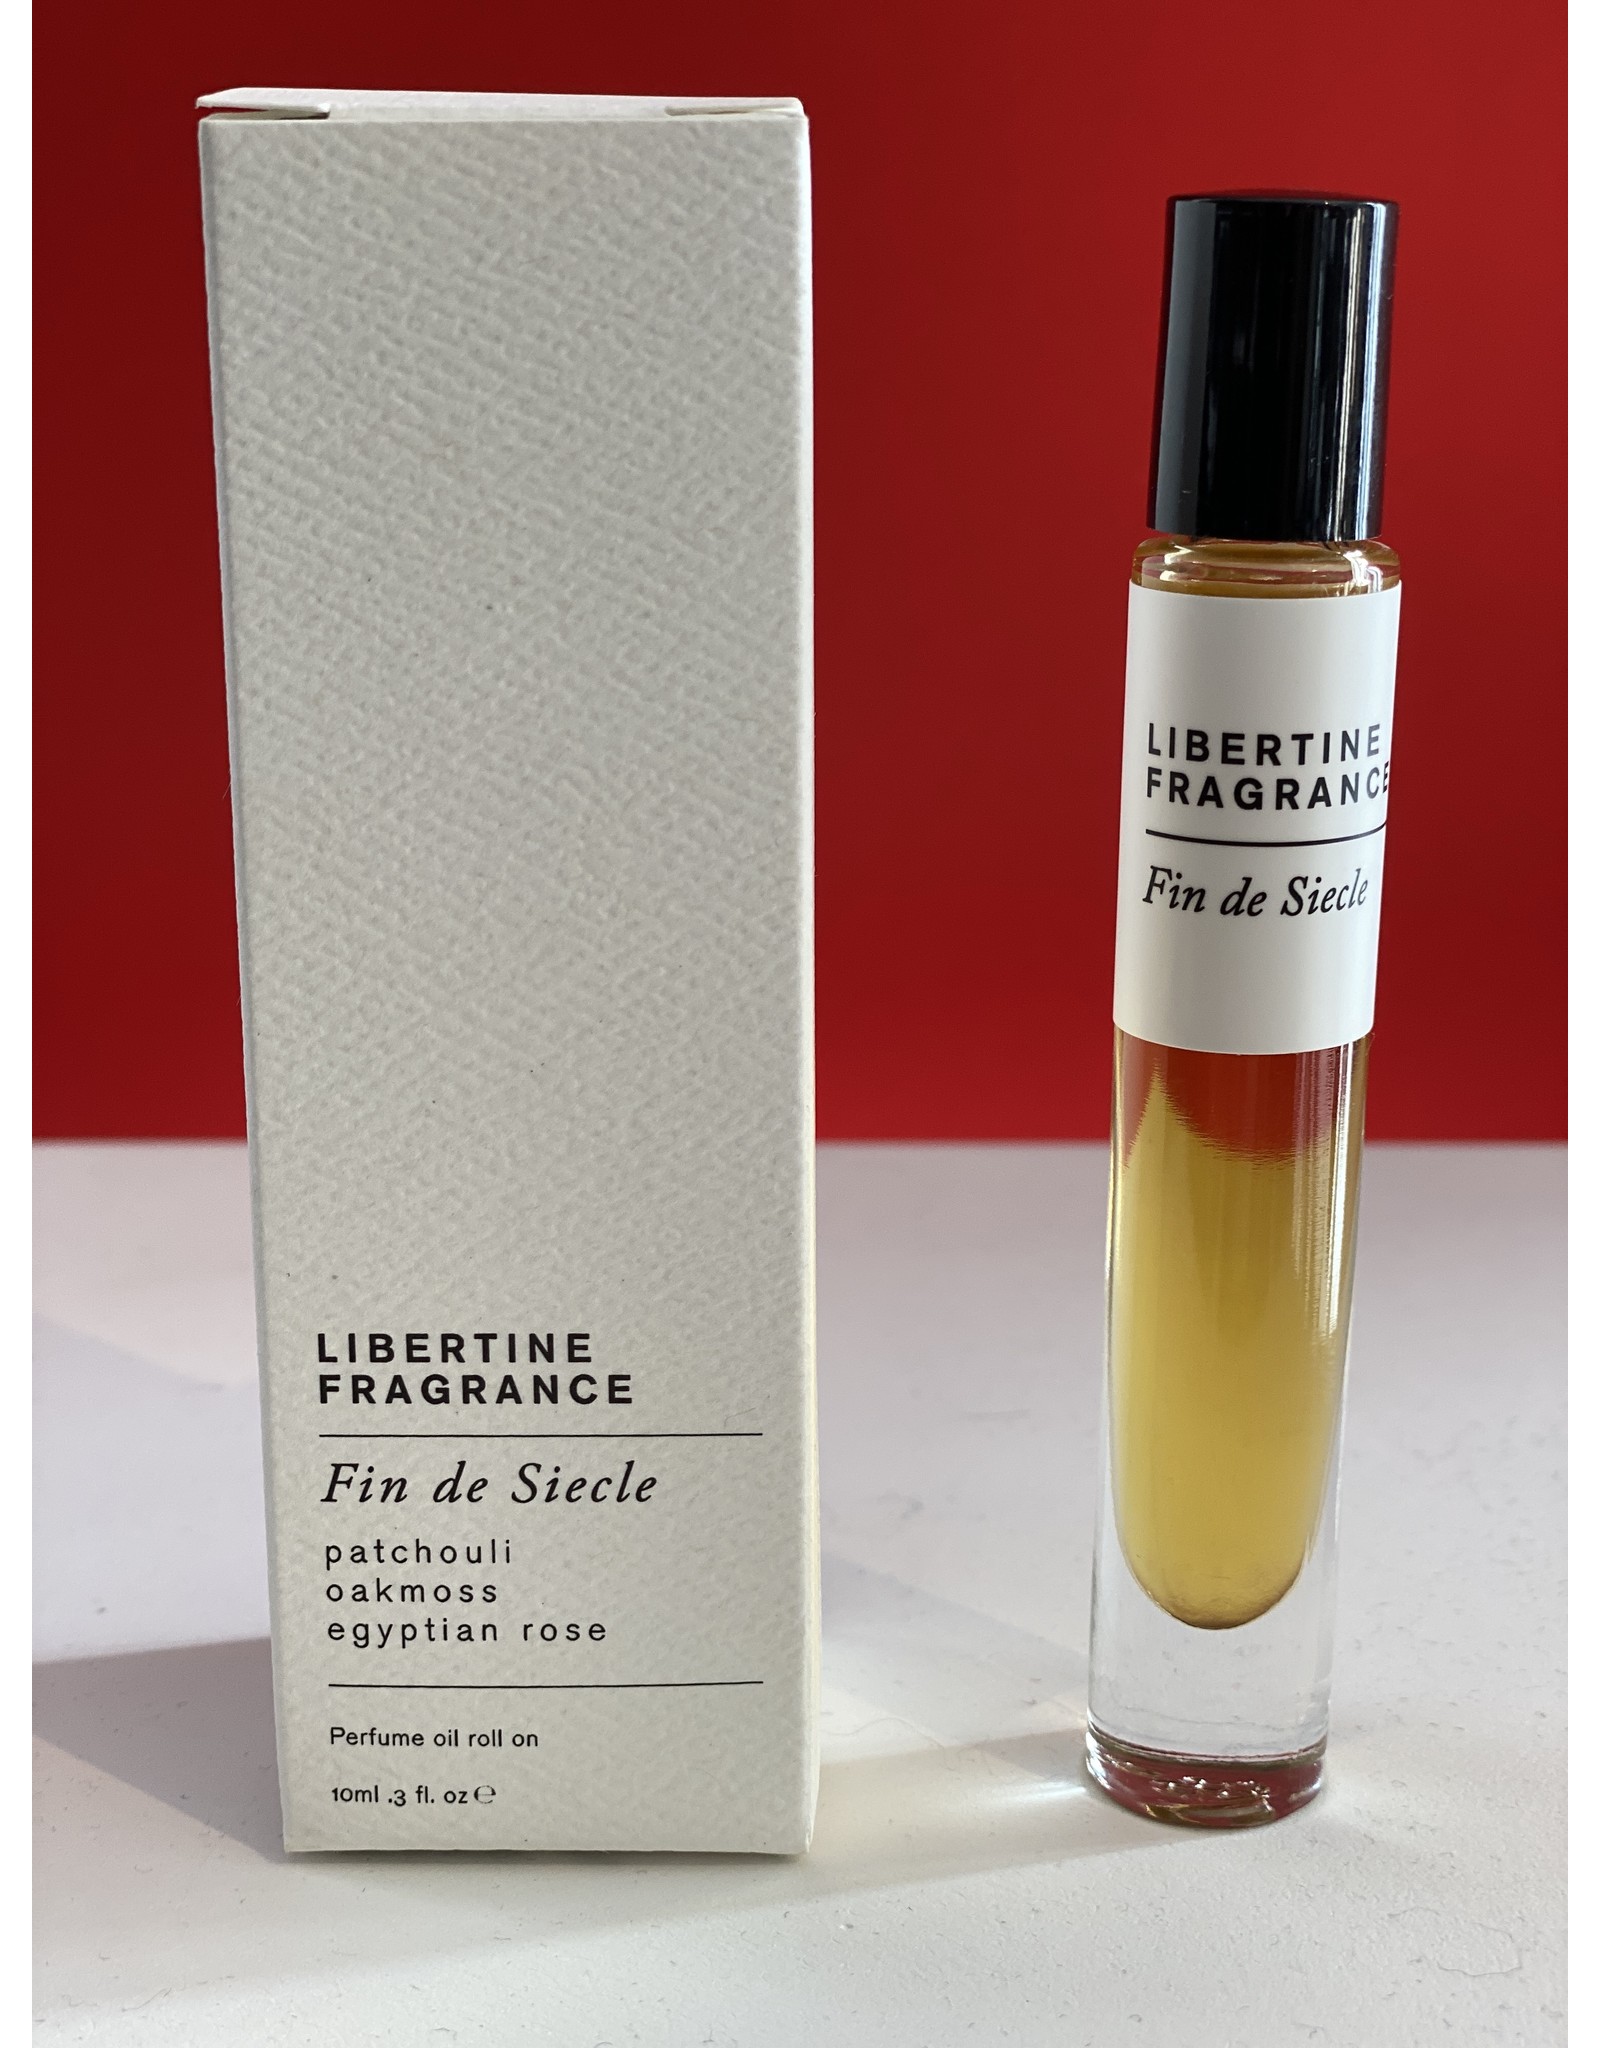 Libertine Fragrance Fin de Siecle Perfume Oil